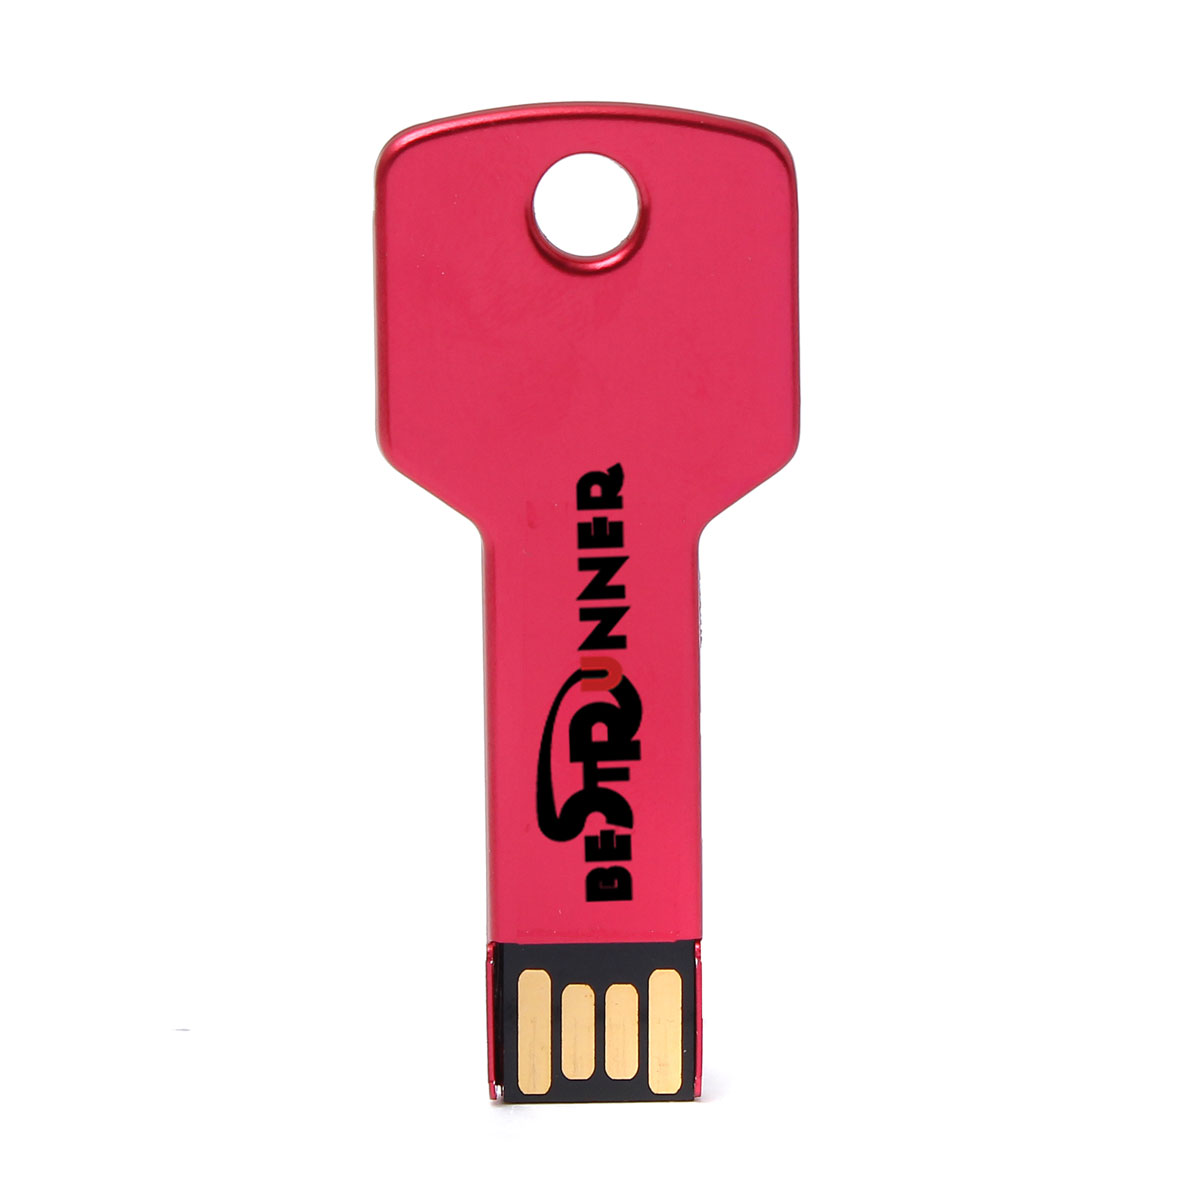 Bestrunner 2GB USB Metal Key Drive Flash Memory Drive Thumb Design 15